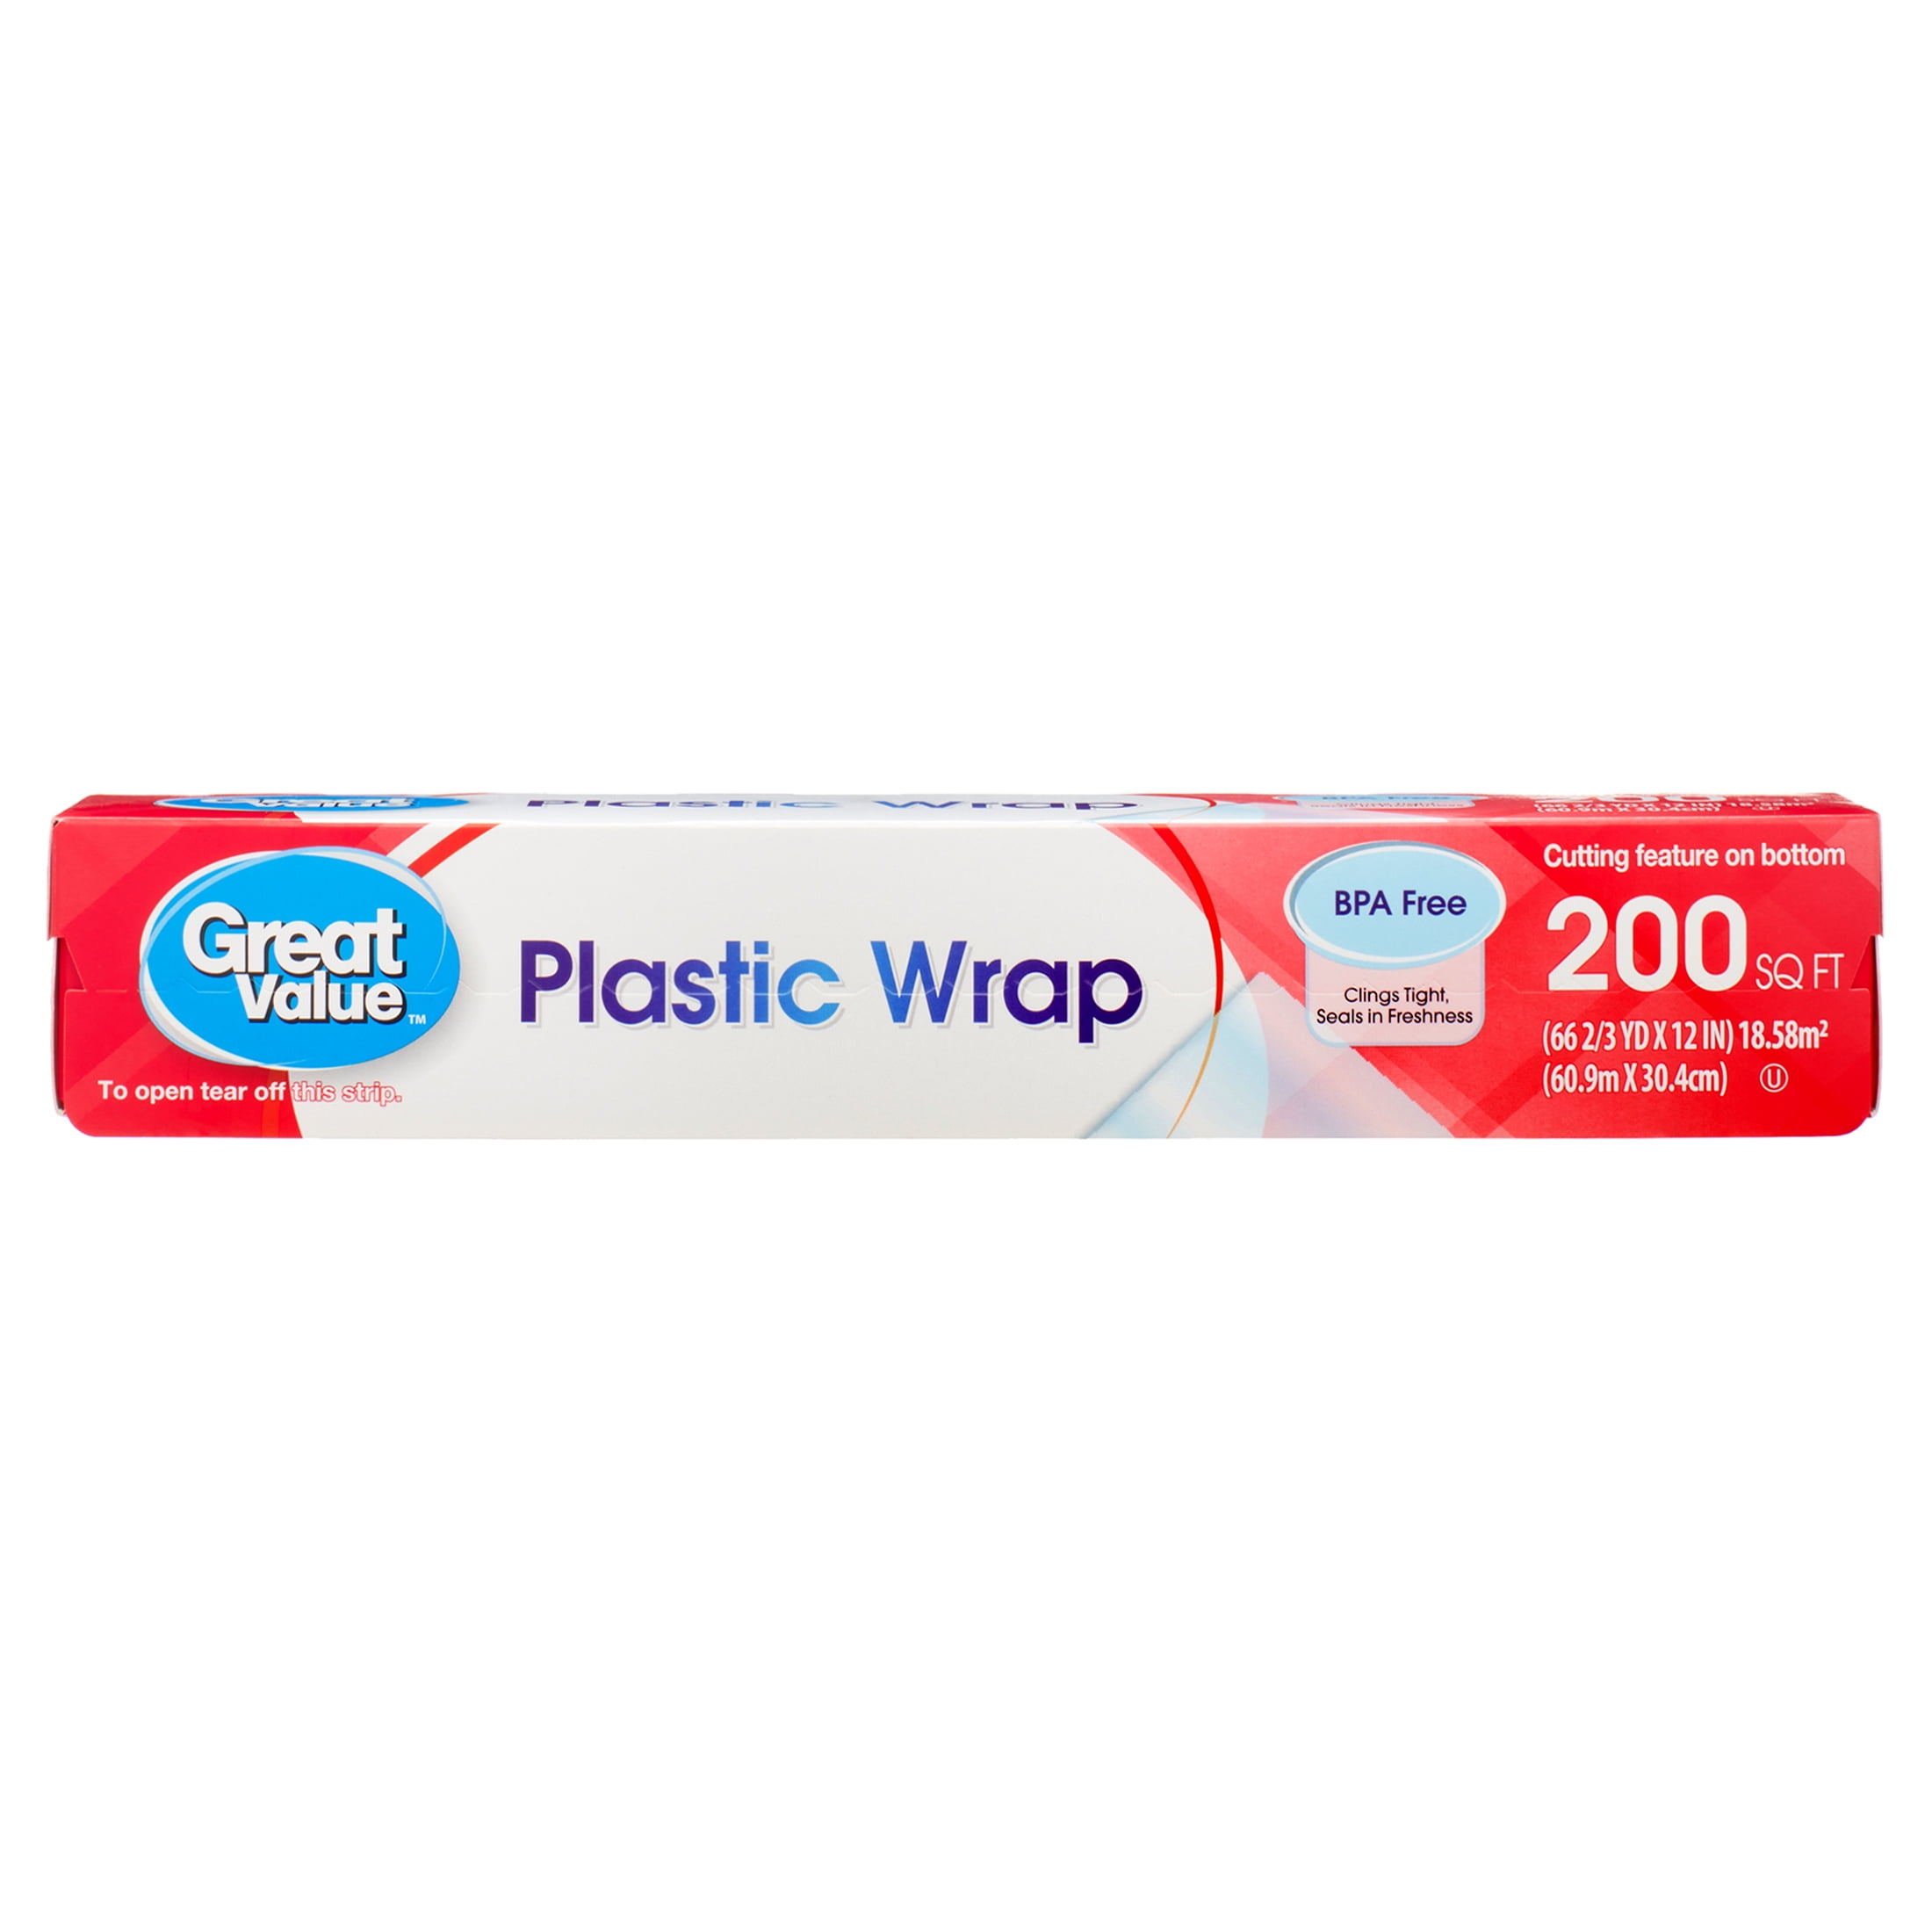 Great Value Plastic Wrap, 200 sq ft